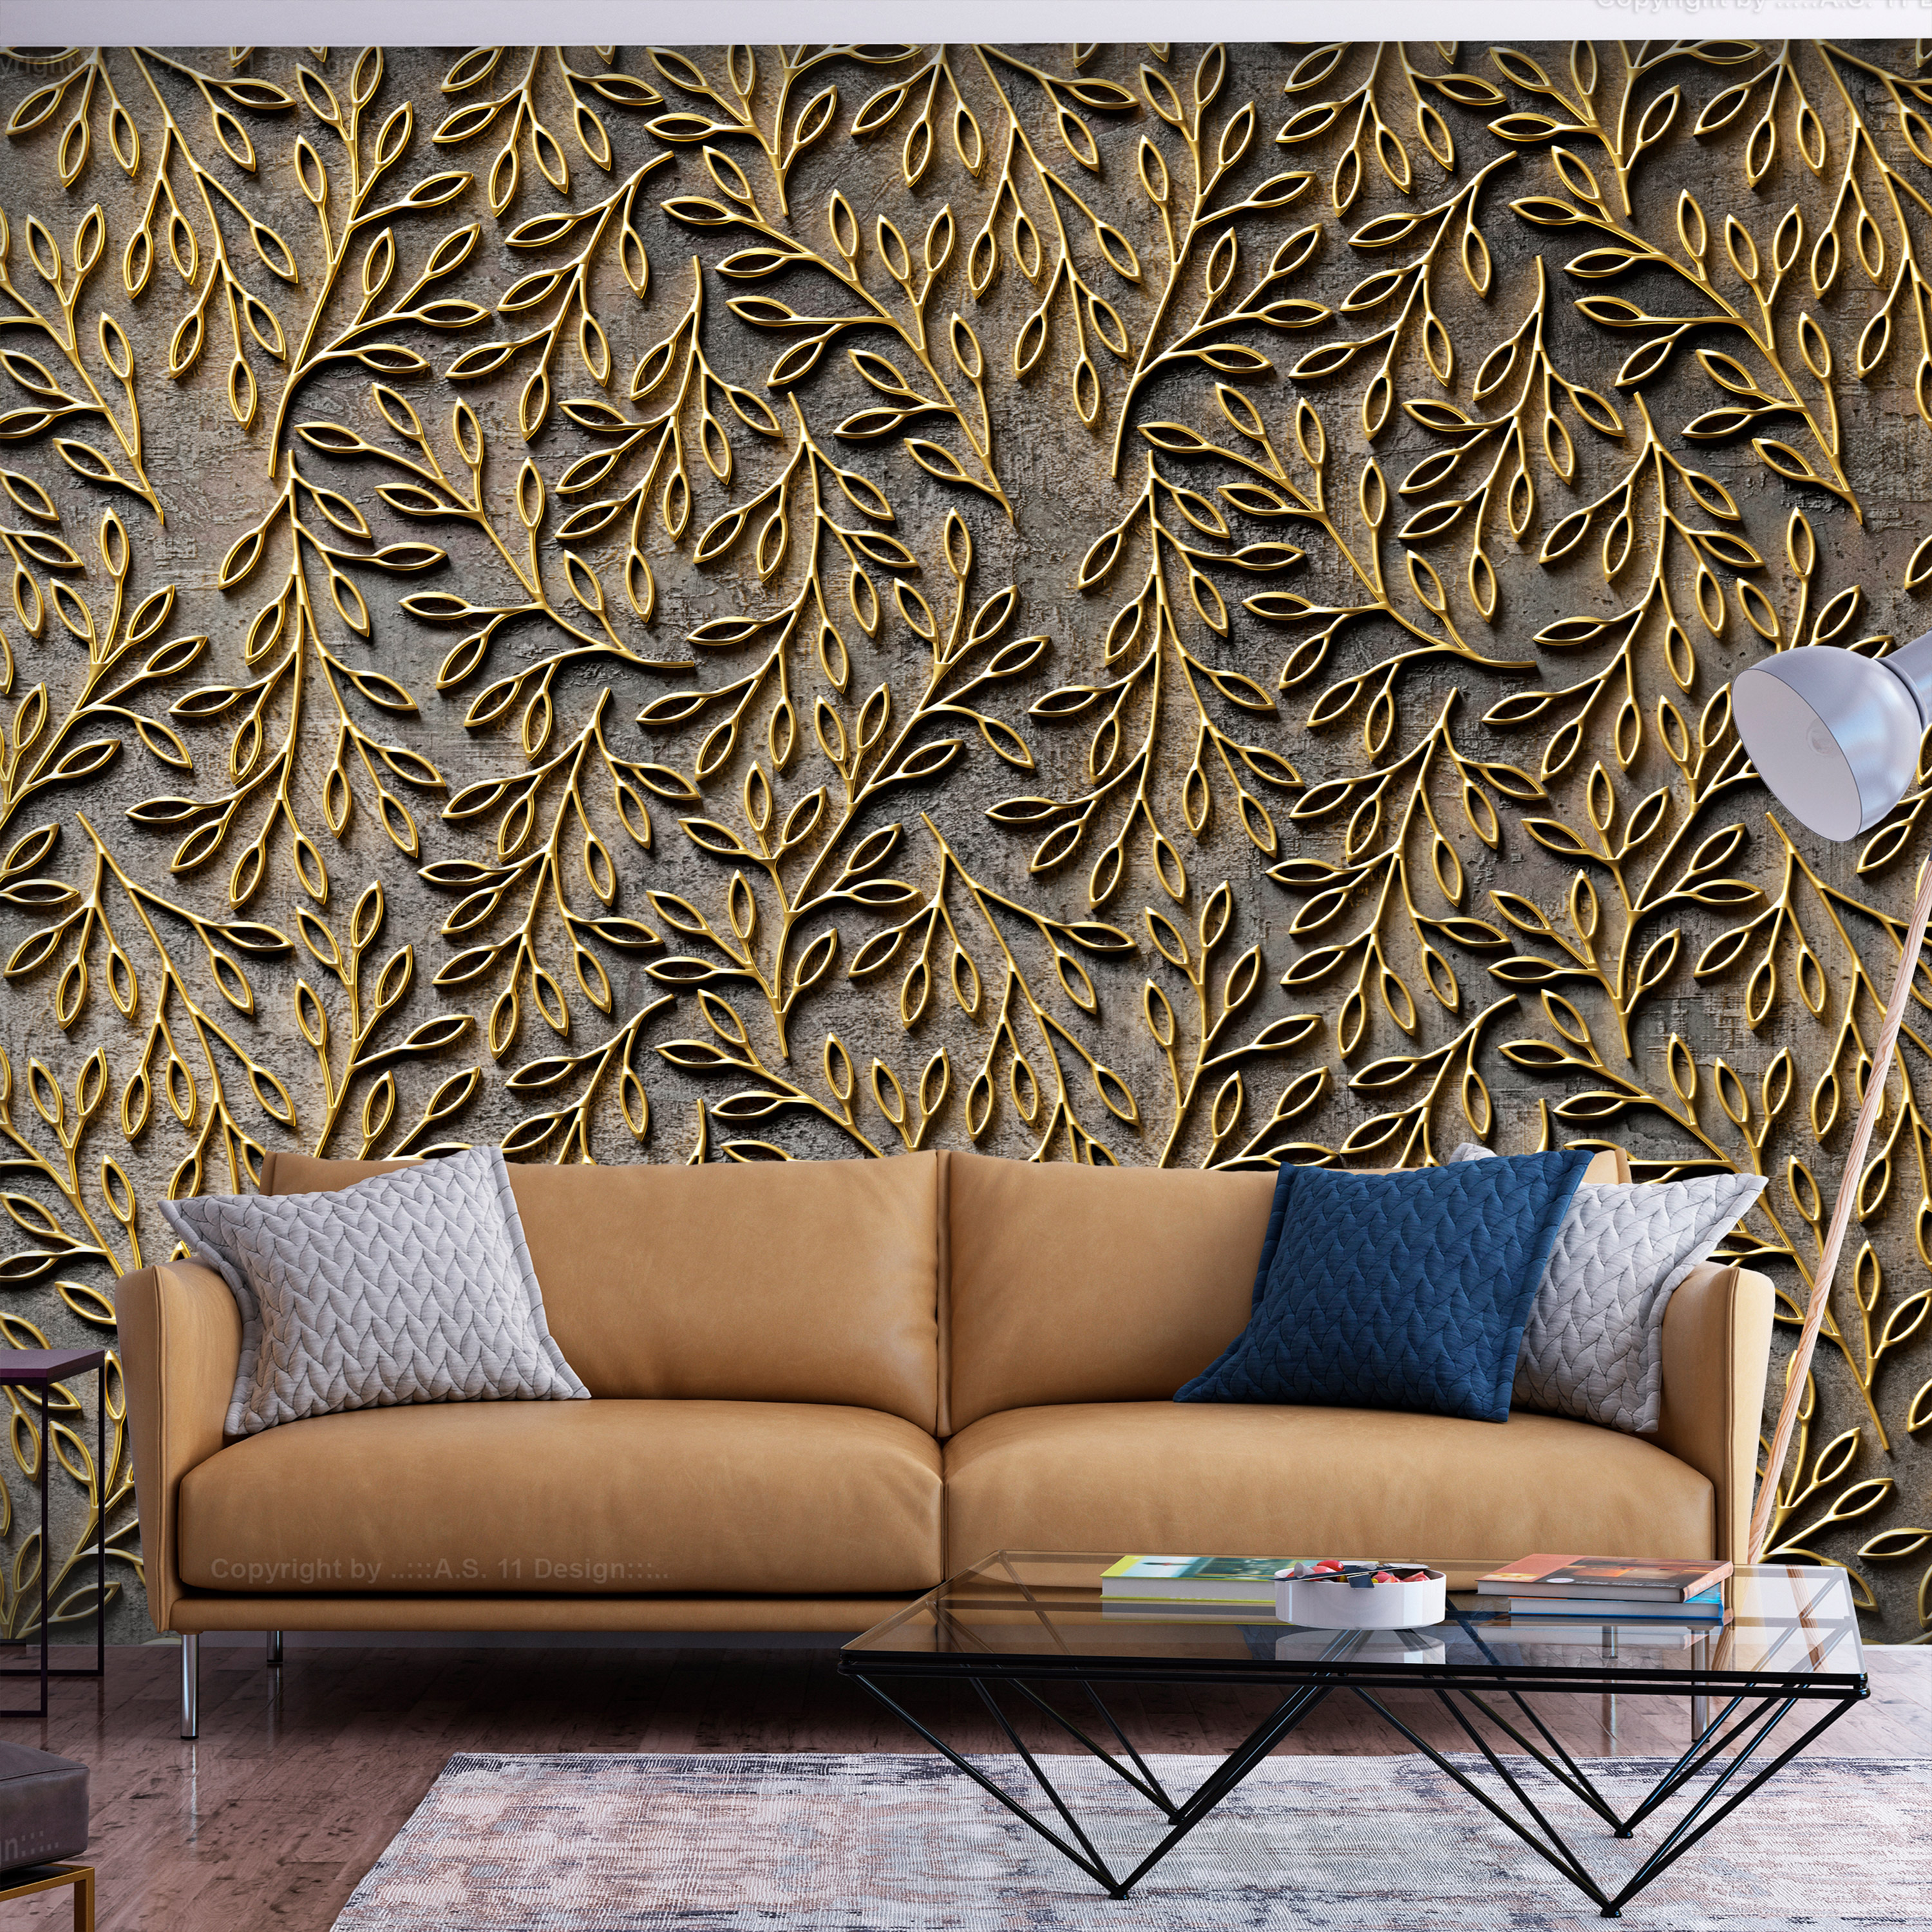 Self-adhesive Wallpaper - Golden Decorations - 98x70